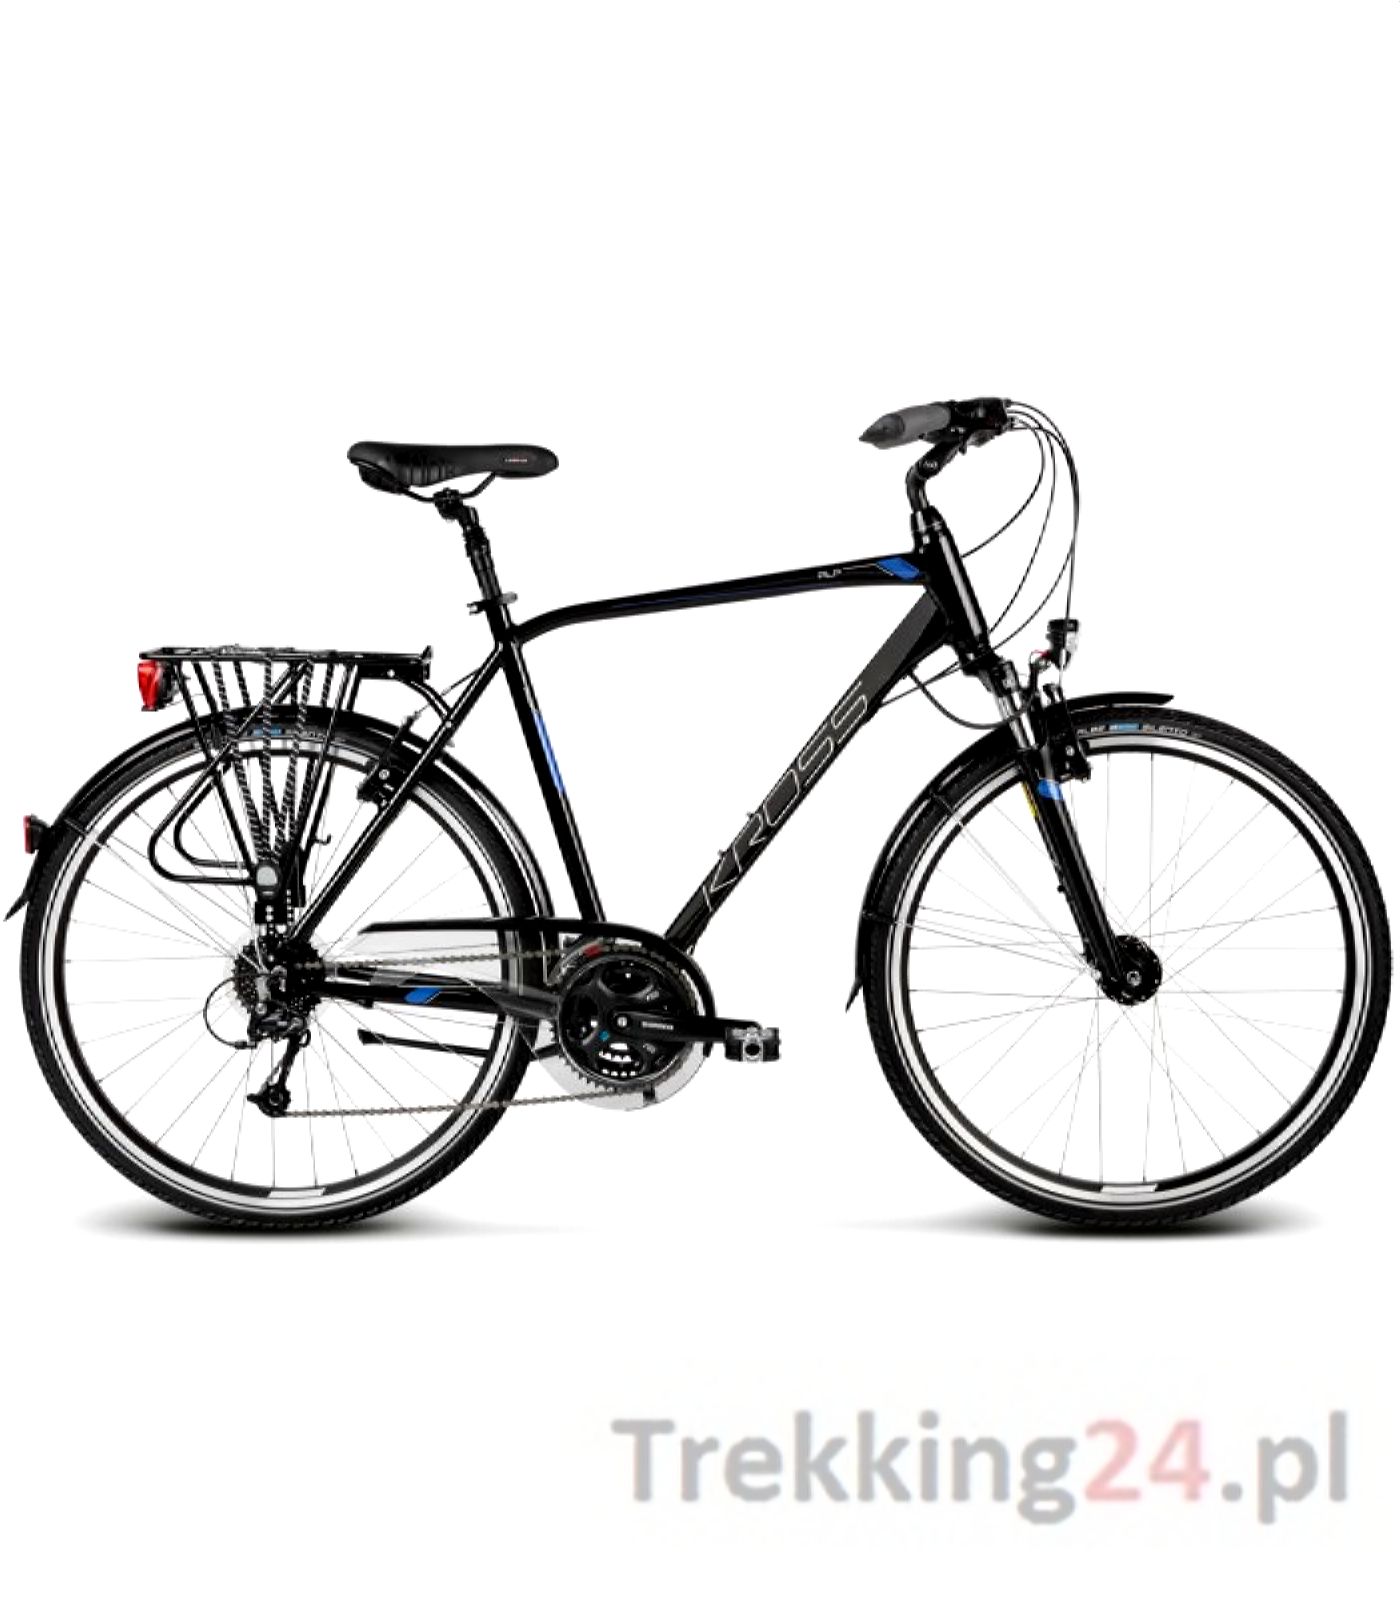 in progress Someday testimony Dla kogo rower trekkingowy? - Trekking24